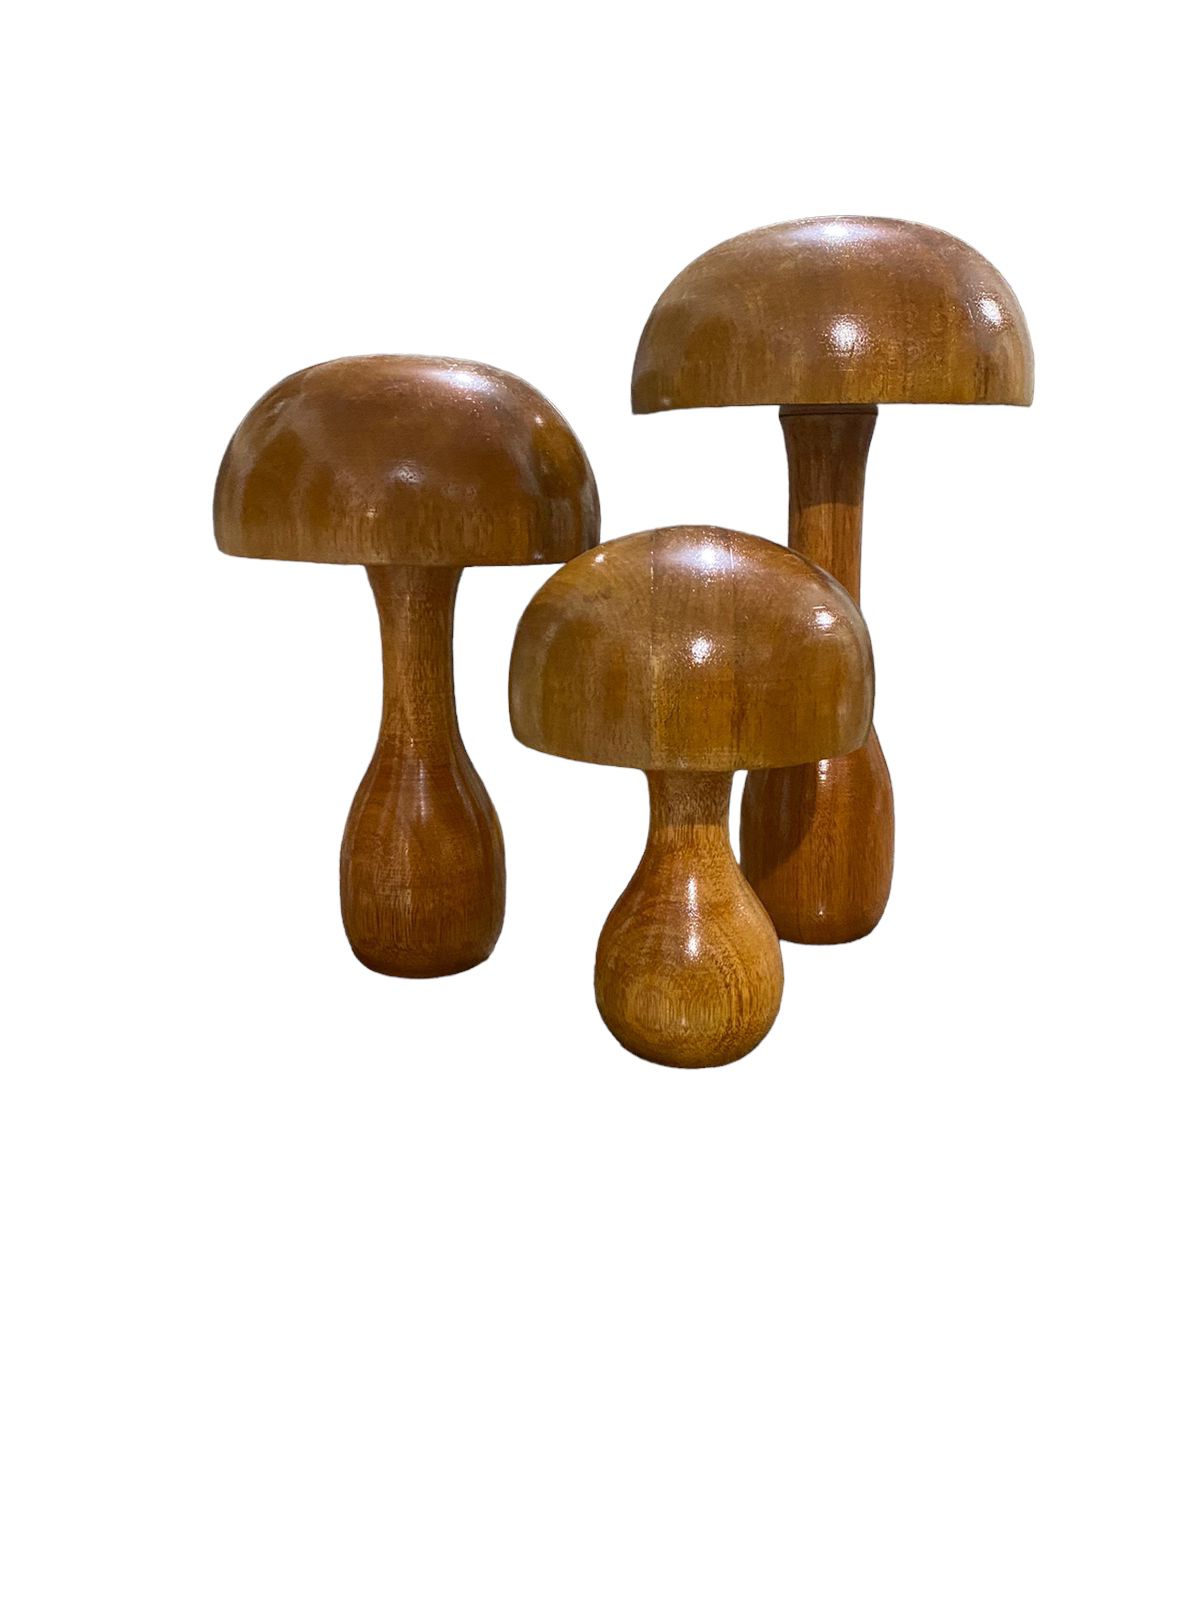 Cogumelo Fungi - 16x25cm